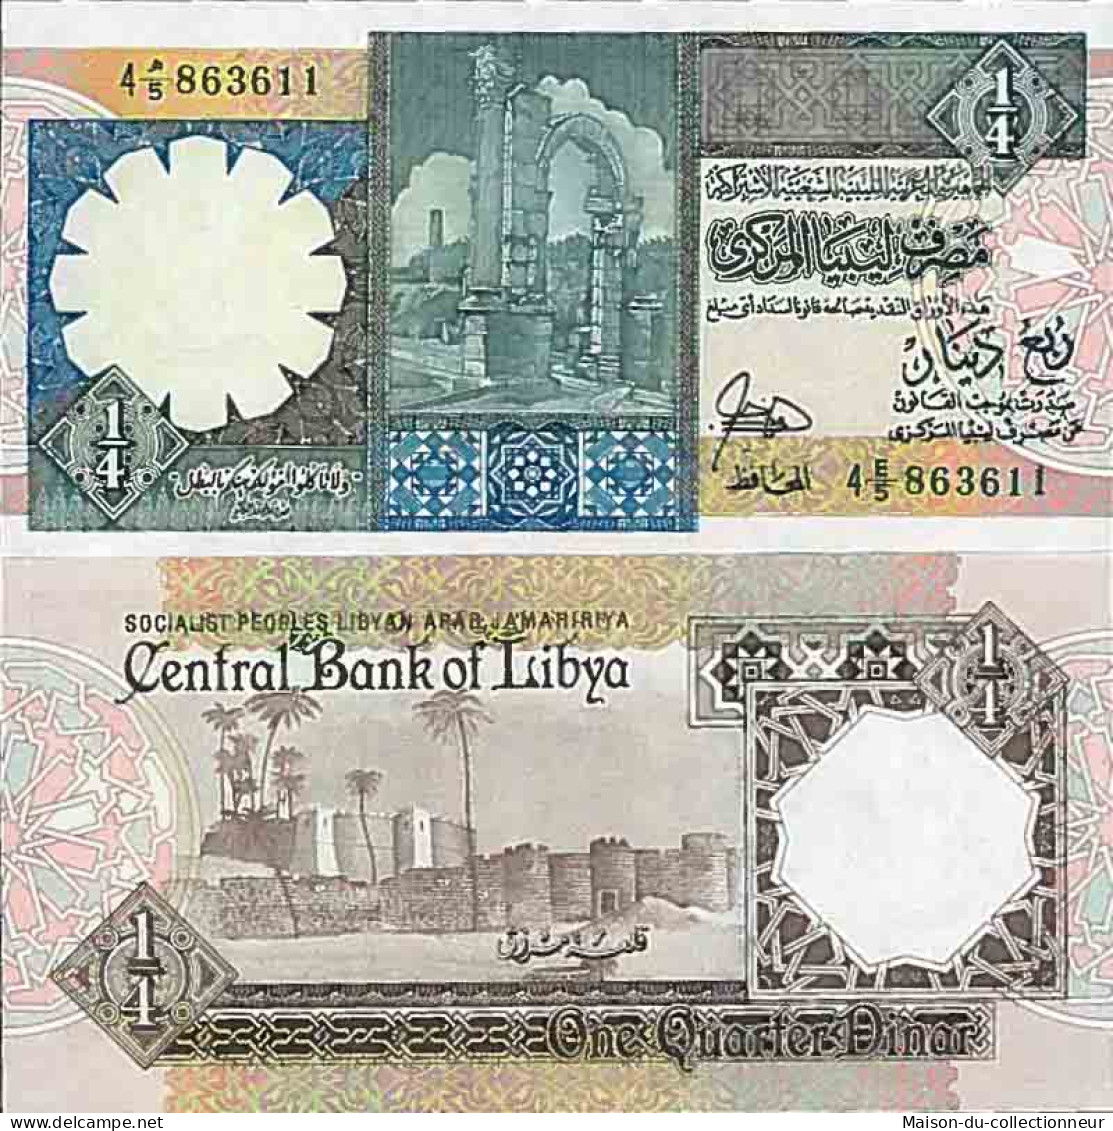 Billet De Banque Collection Libye - PK N° 52 - 1/4 Dinar - Libye